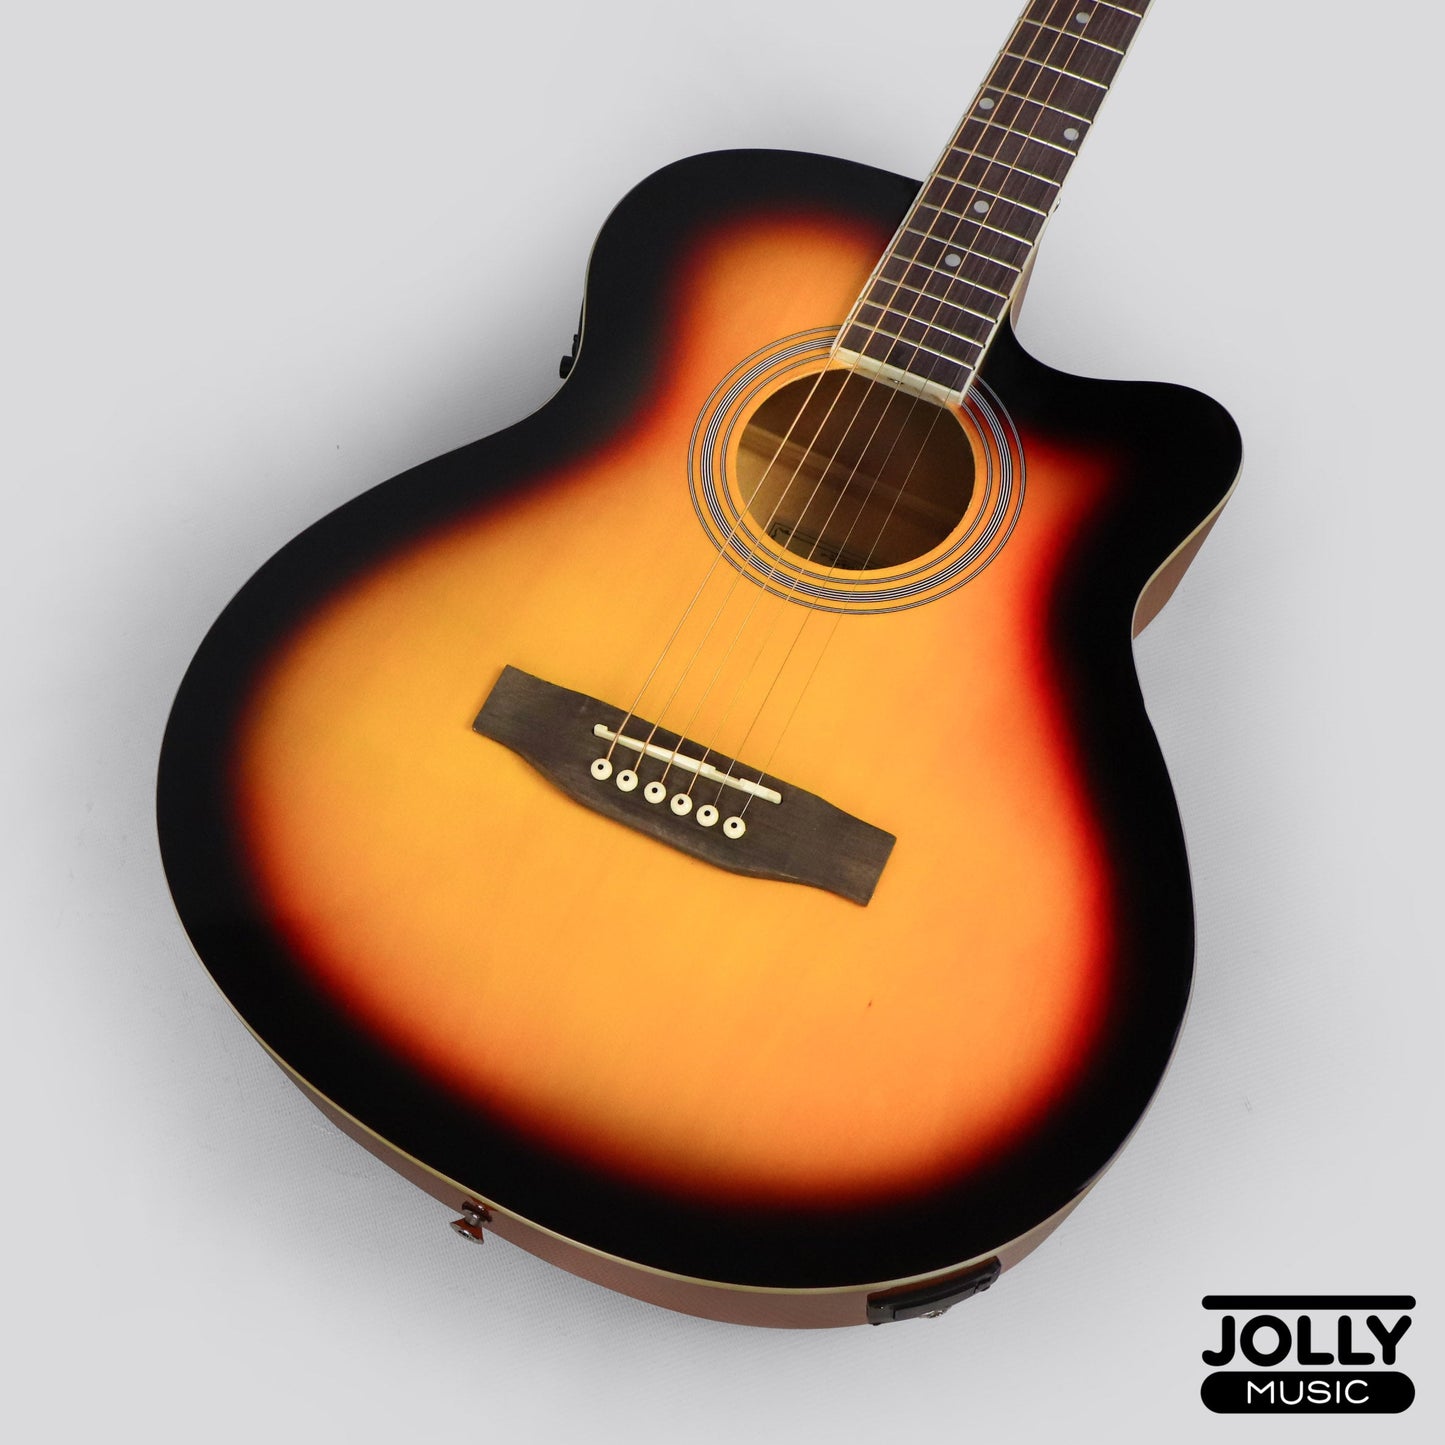 Caravan HS-4010 EQ Acoustic Guitar with FREE Gigbag - Sunburst